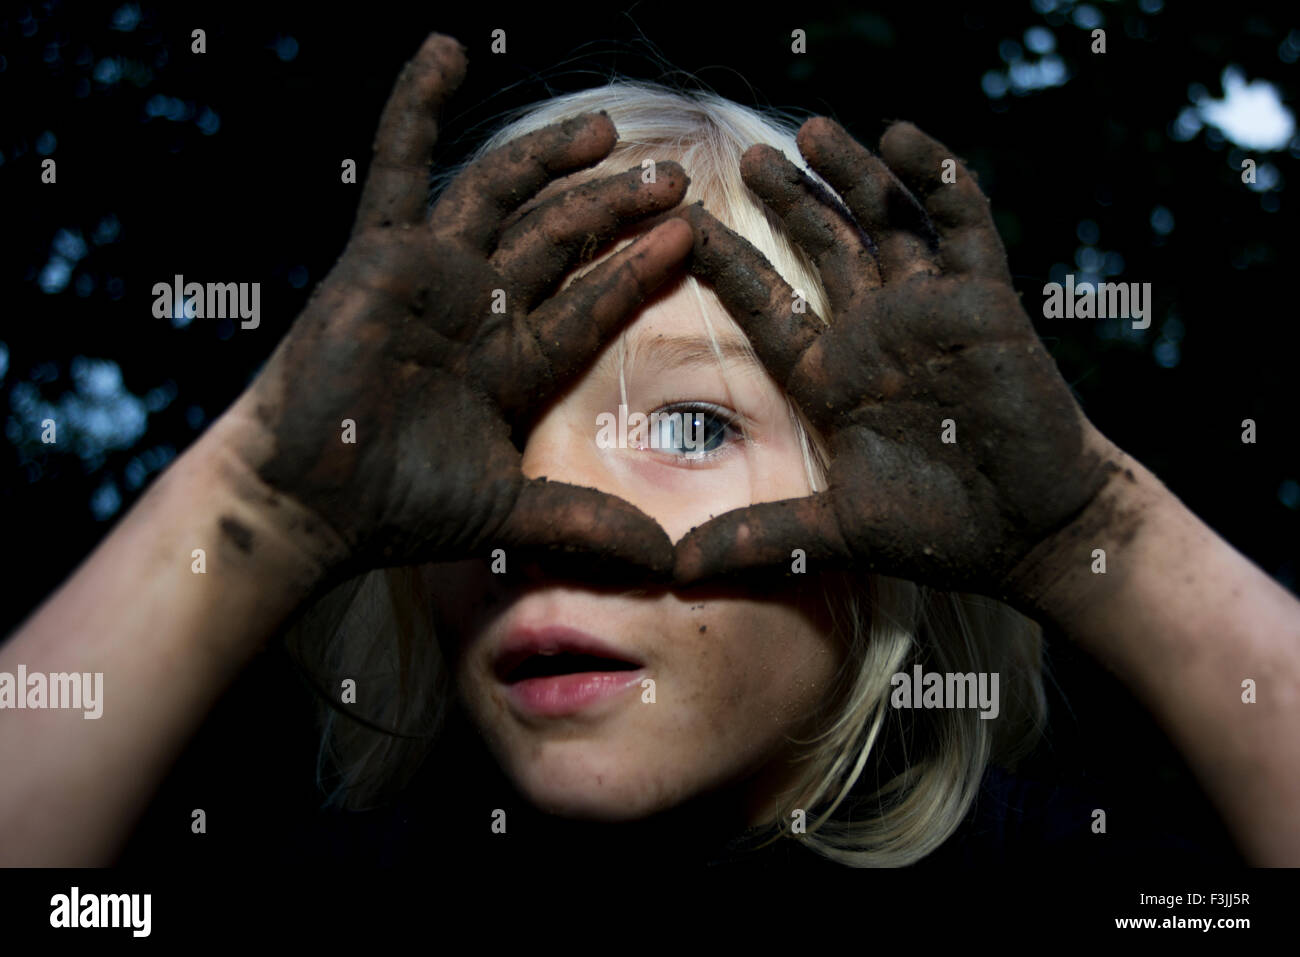 Portrait of little child blond girl showing hands full of dirt Stock Photo